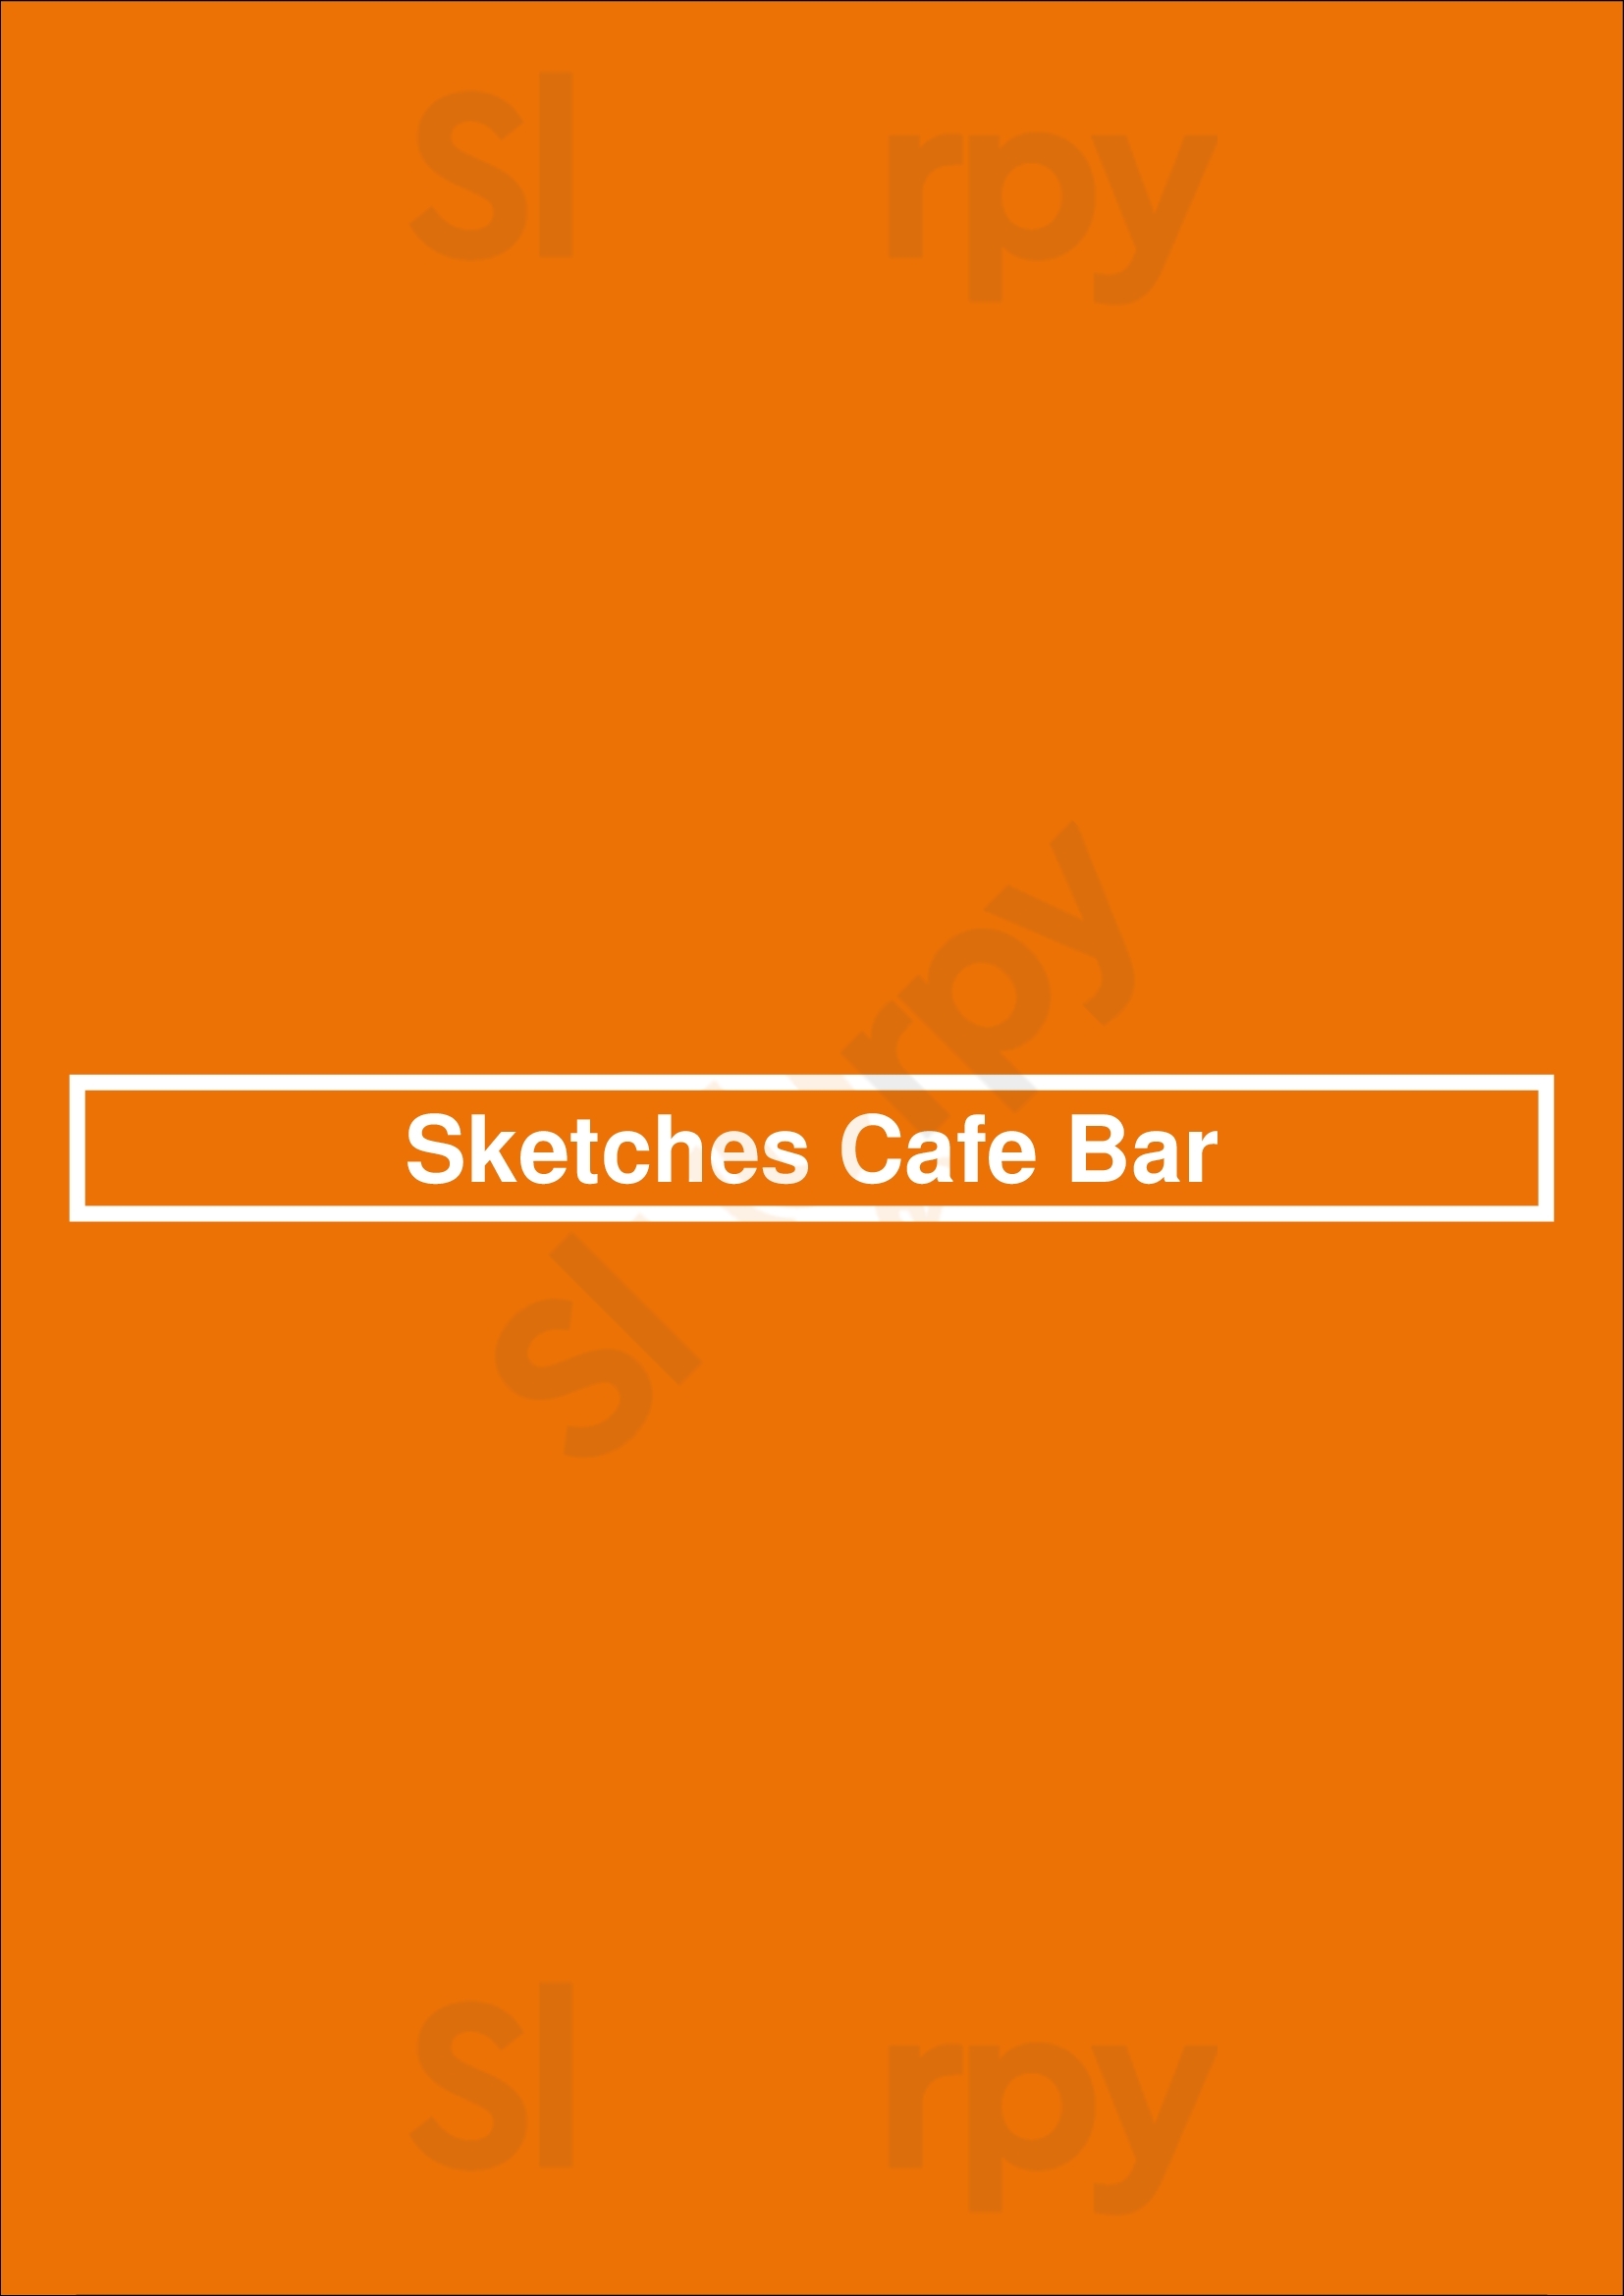 Sketches Cafe Bar Burwood Menu - 1